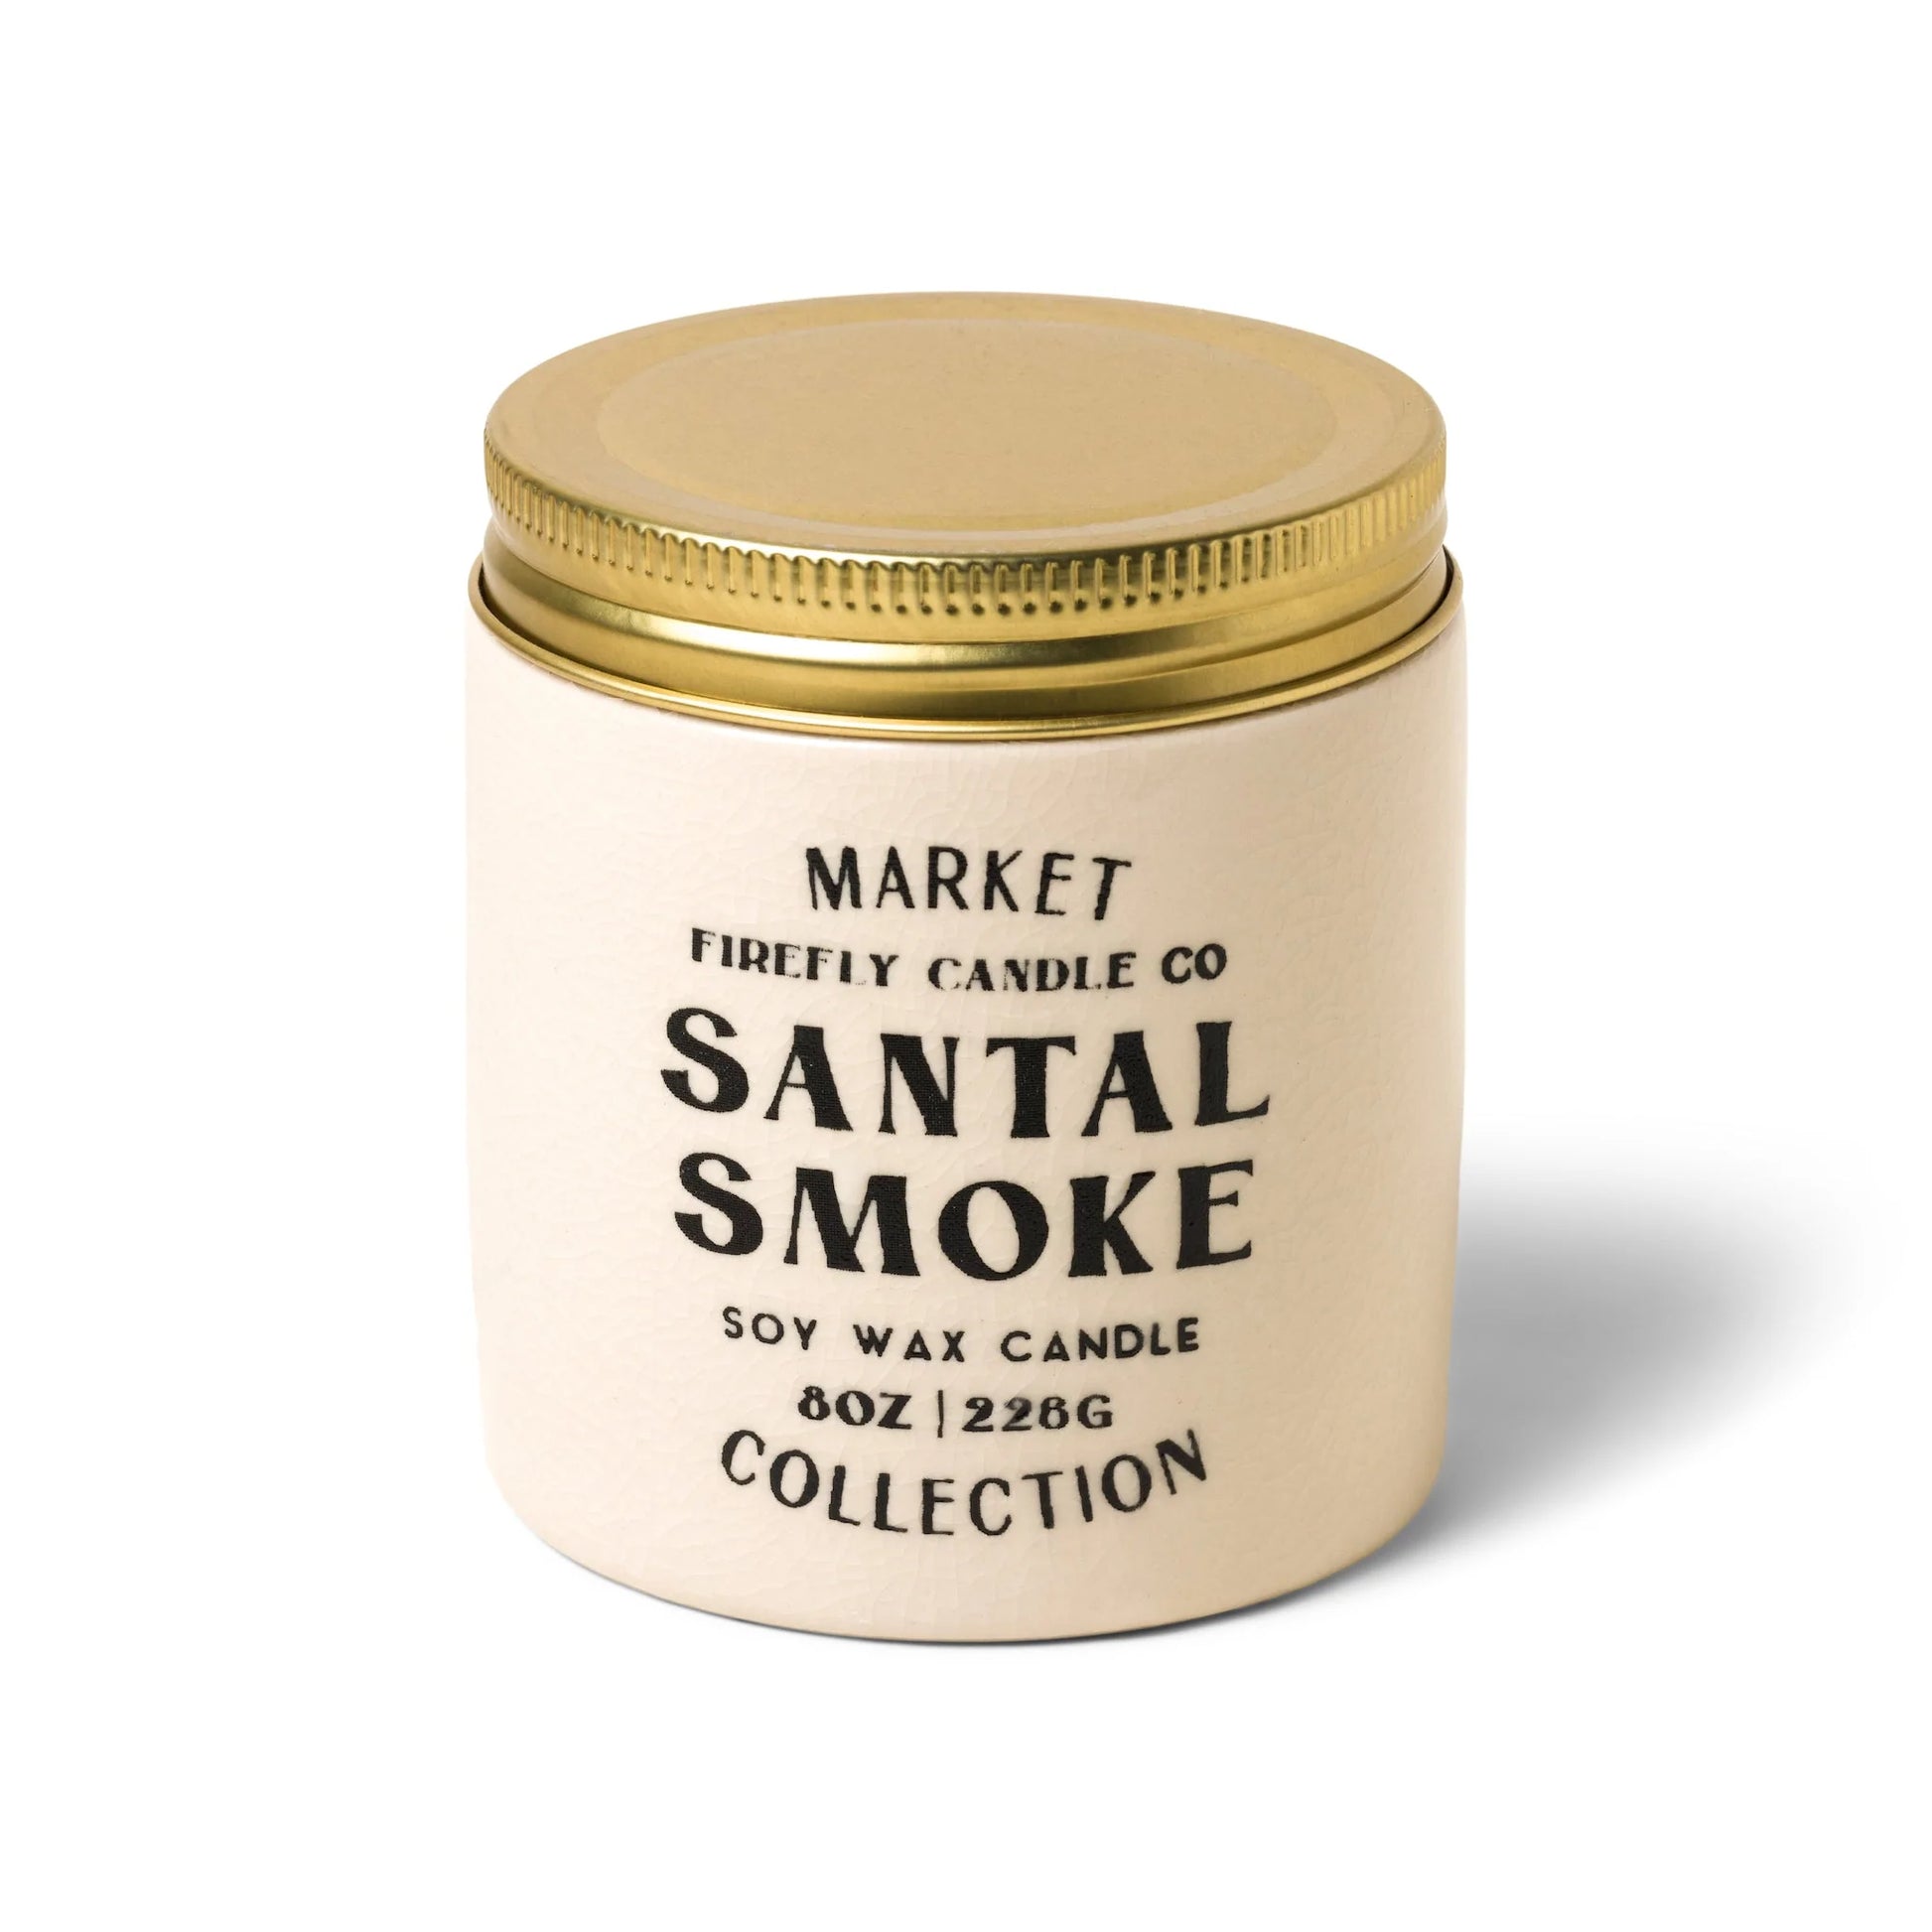 Market 8 oz Candle - Santal Smoke jar and metallic lid